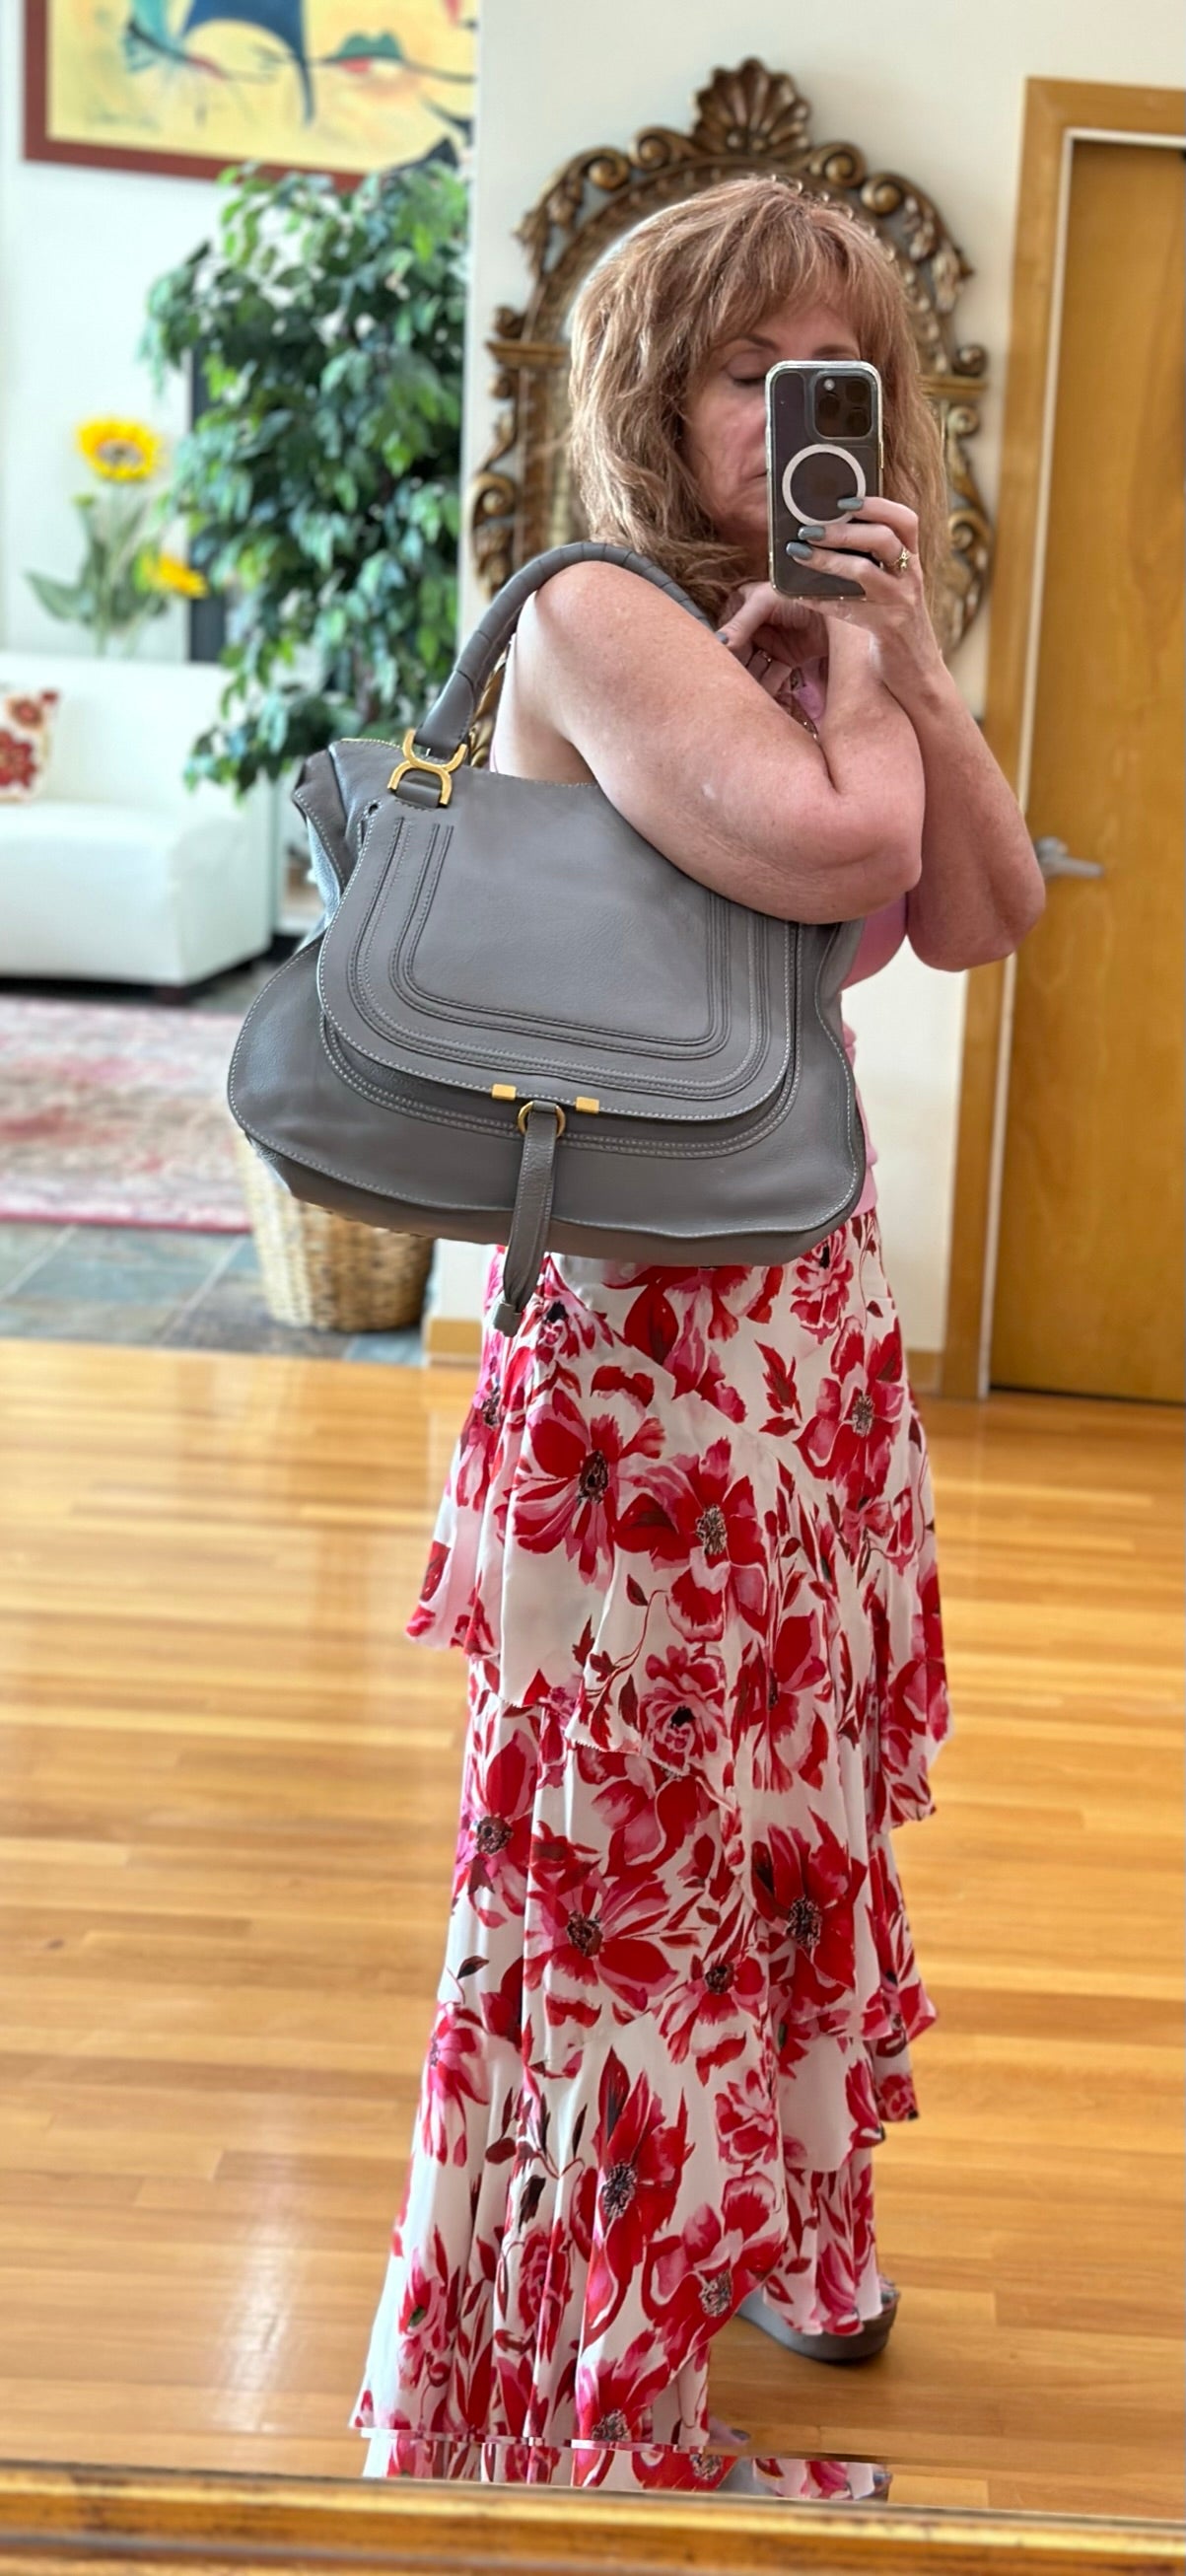 Chloe cashmere grey large Marcie bag like new satchel purse